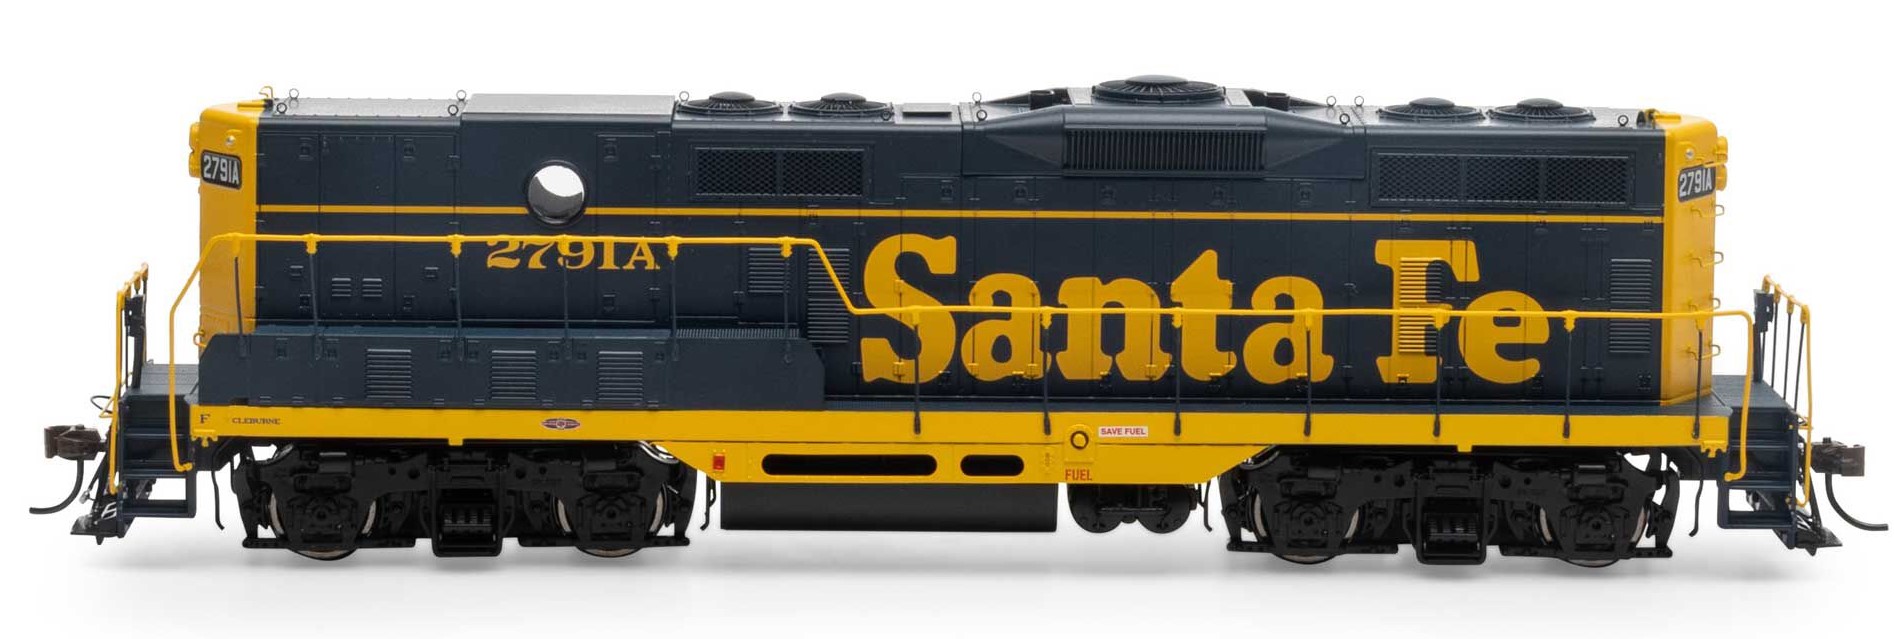 Athearn Genesis HO ATHG82709 DCC/Tsunami 2 Sound Equipped EMD GP7B Locomotive Santa Fe ATSF #2791A